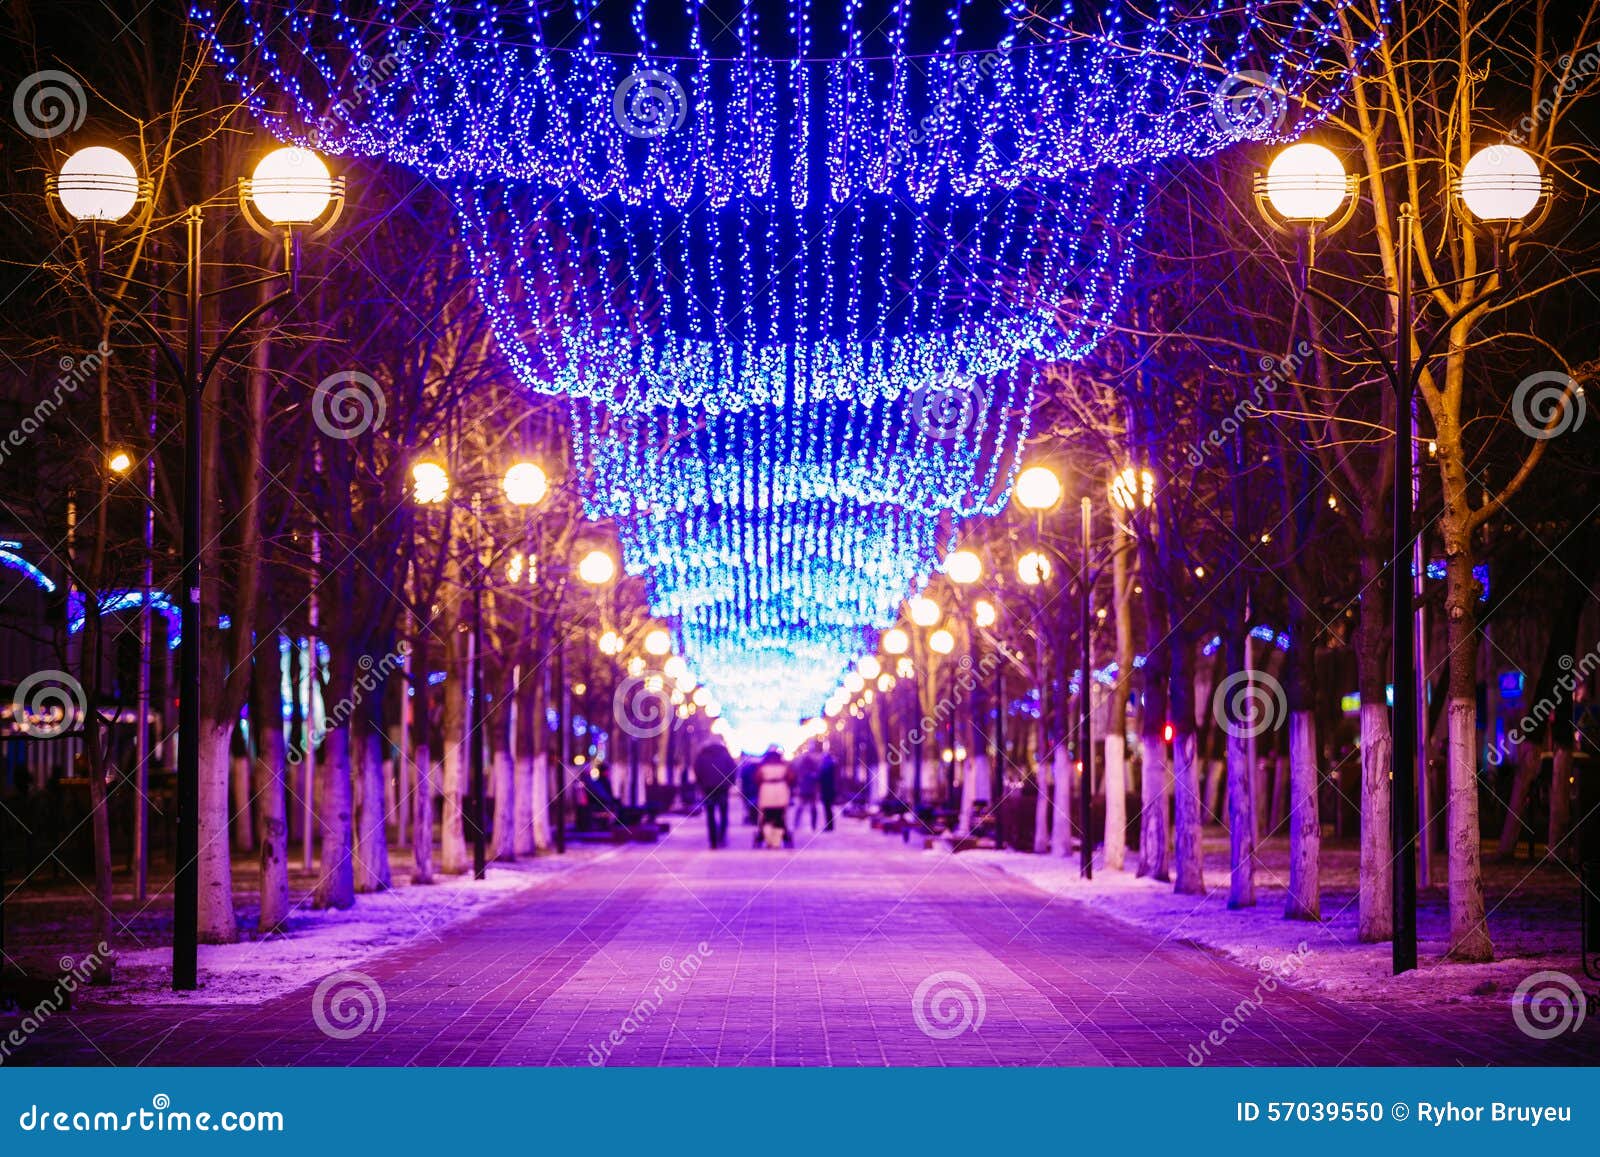 festive illumination on street in gomel. new year